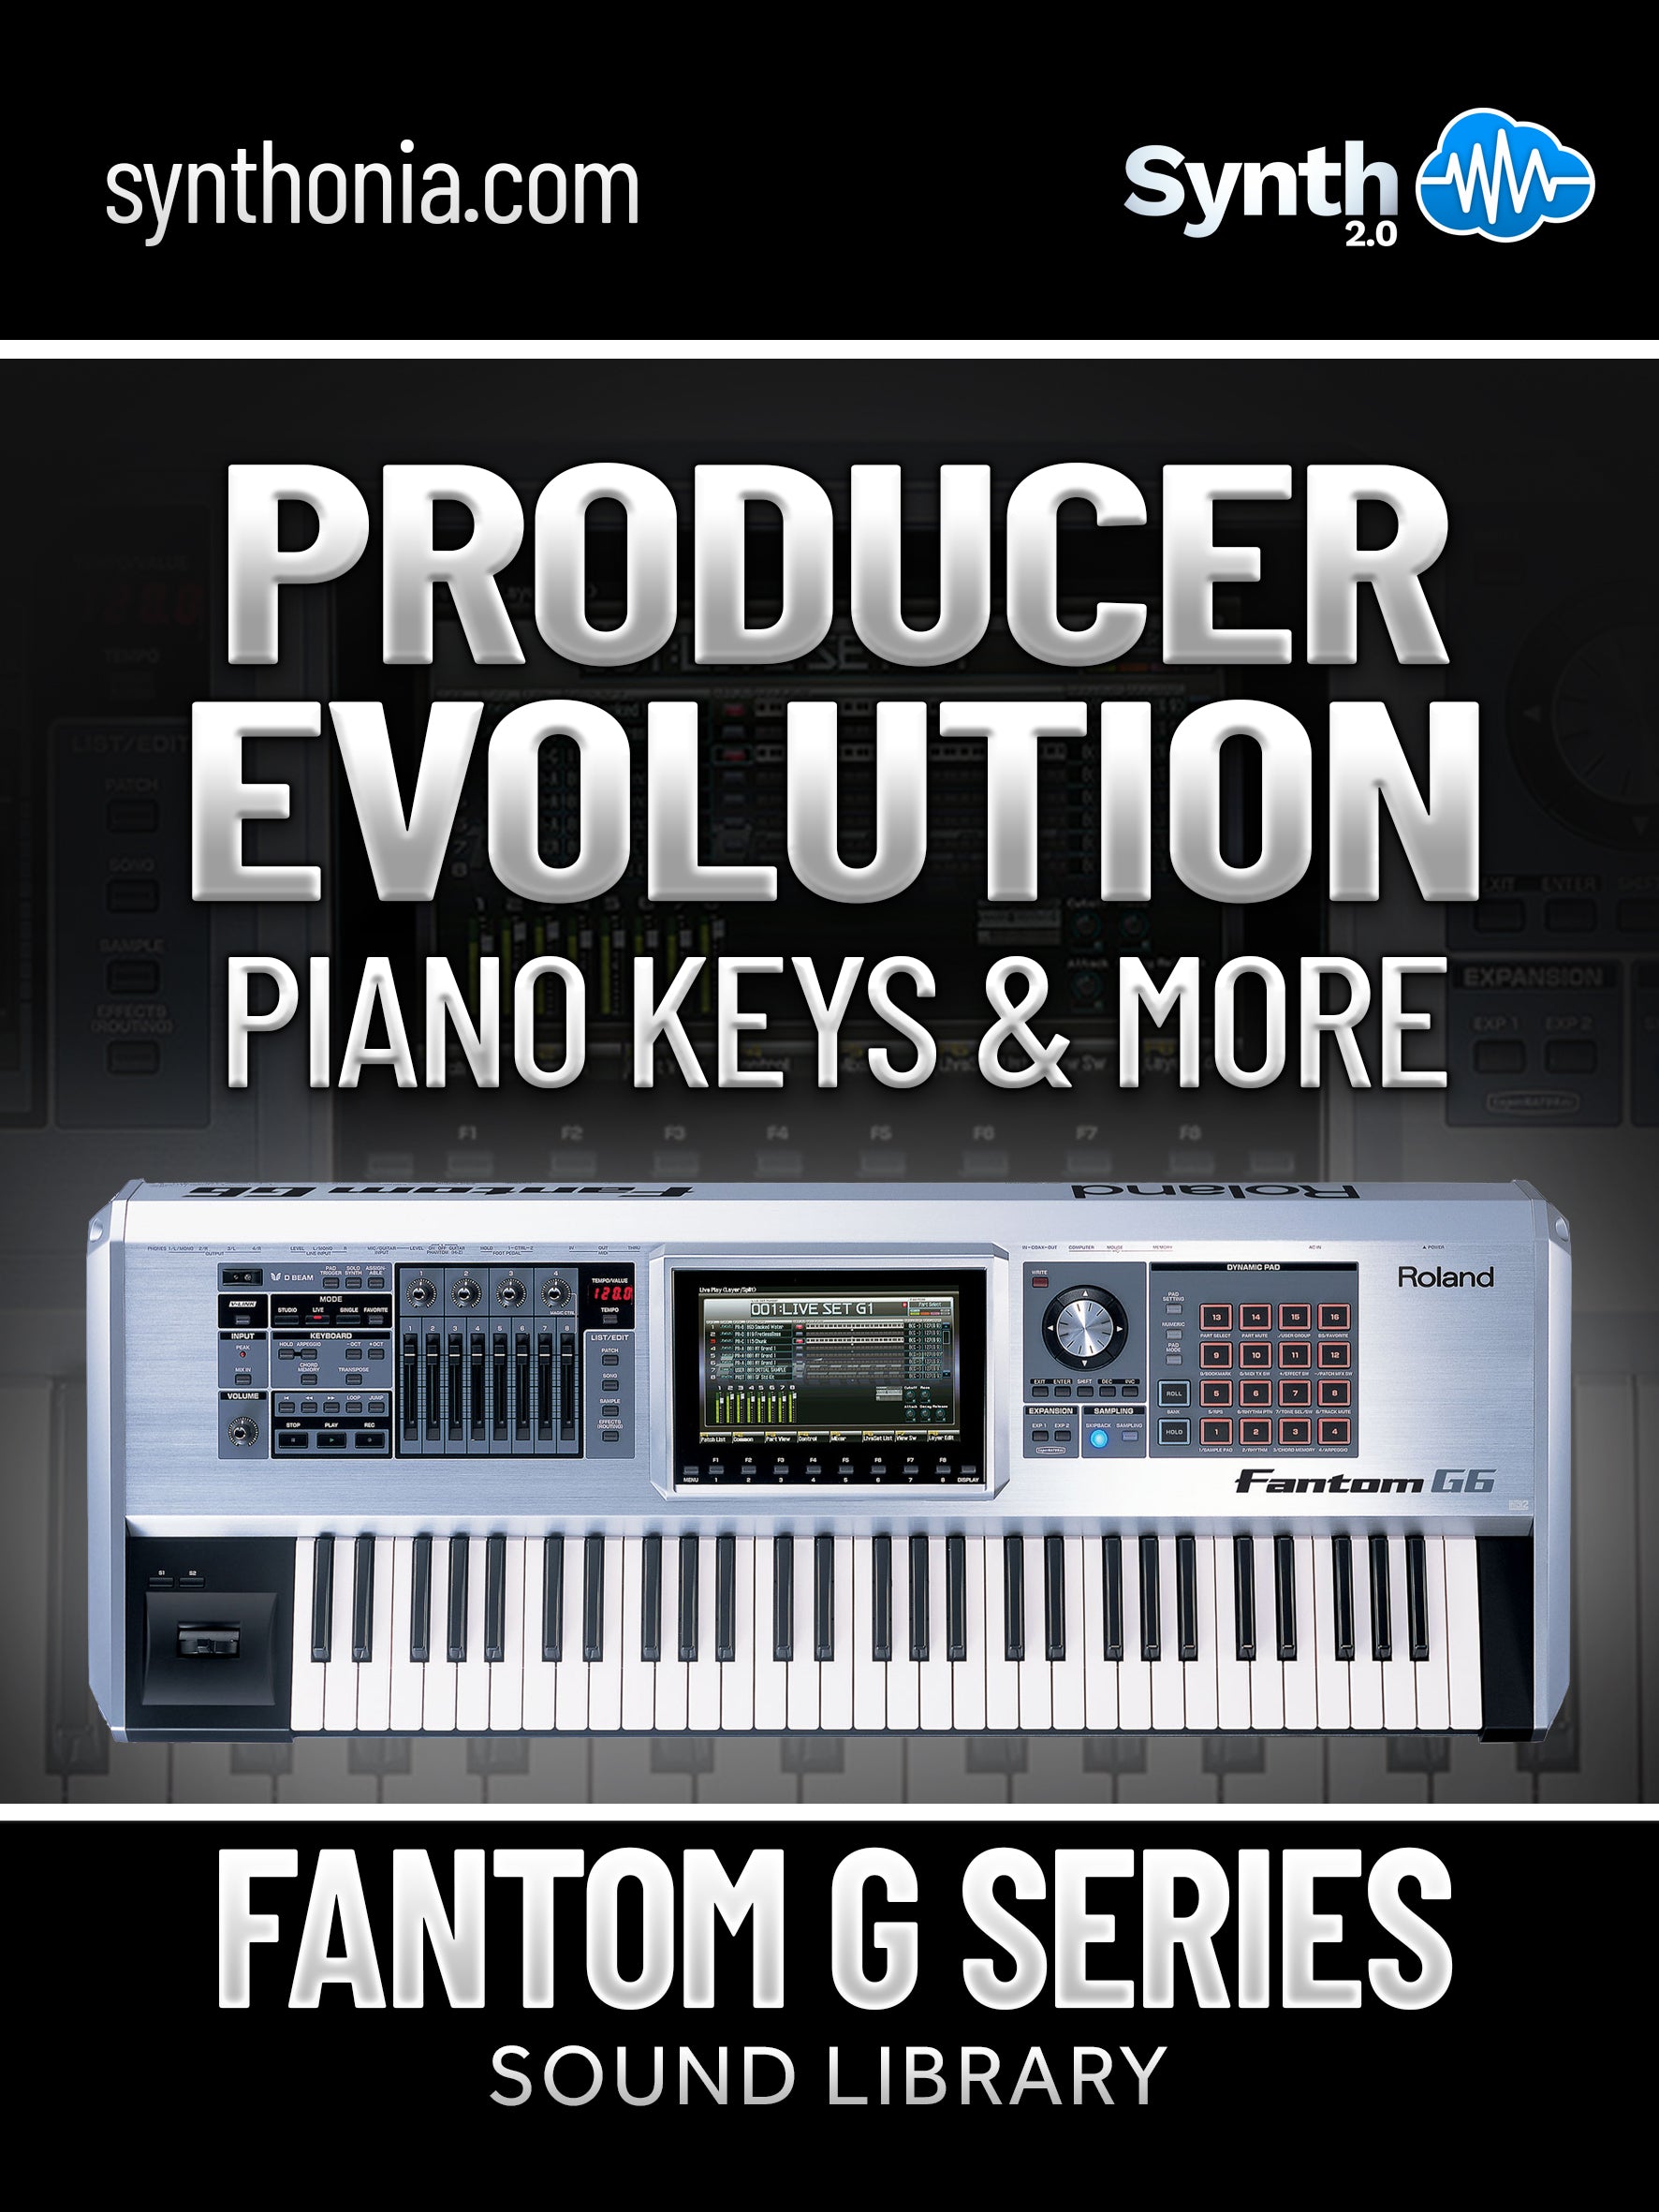 DVK004 - Producer Evolution ( Piano Keys & More ) - Fantom G ( 64 presets )